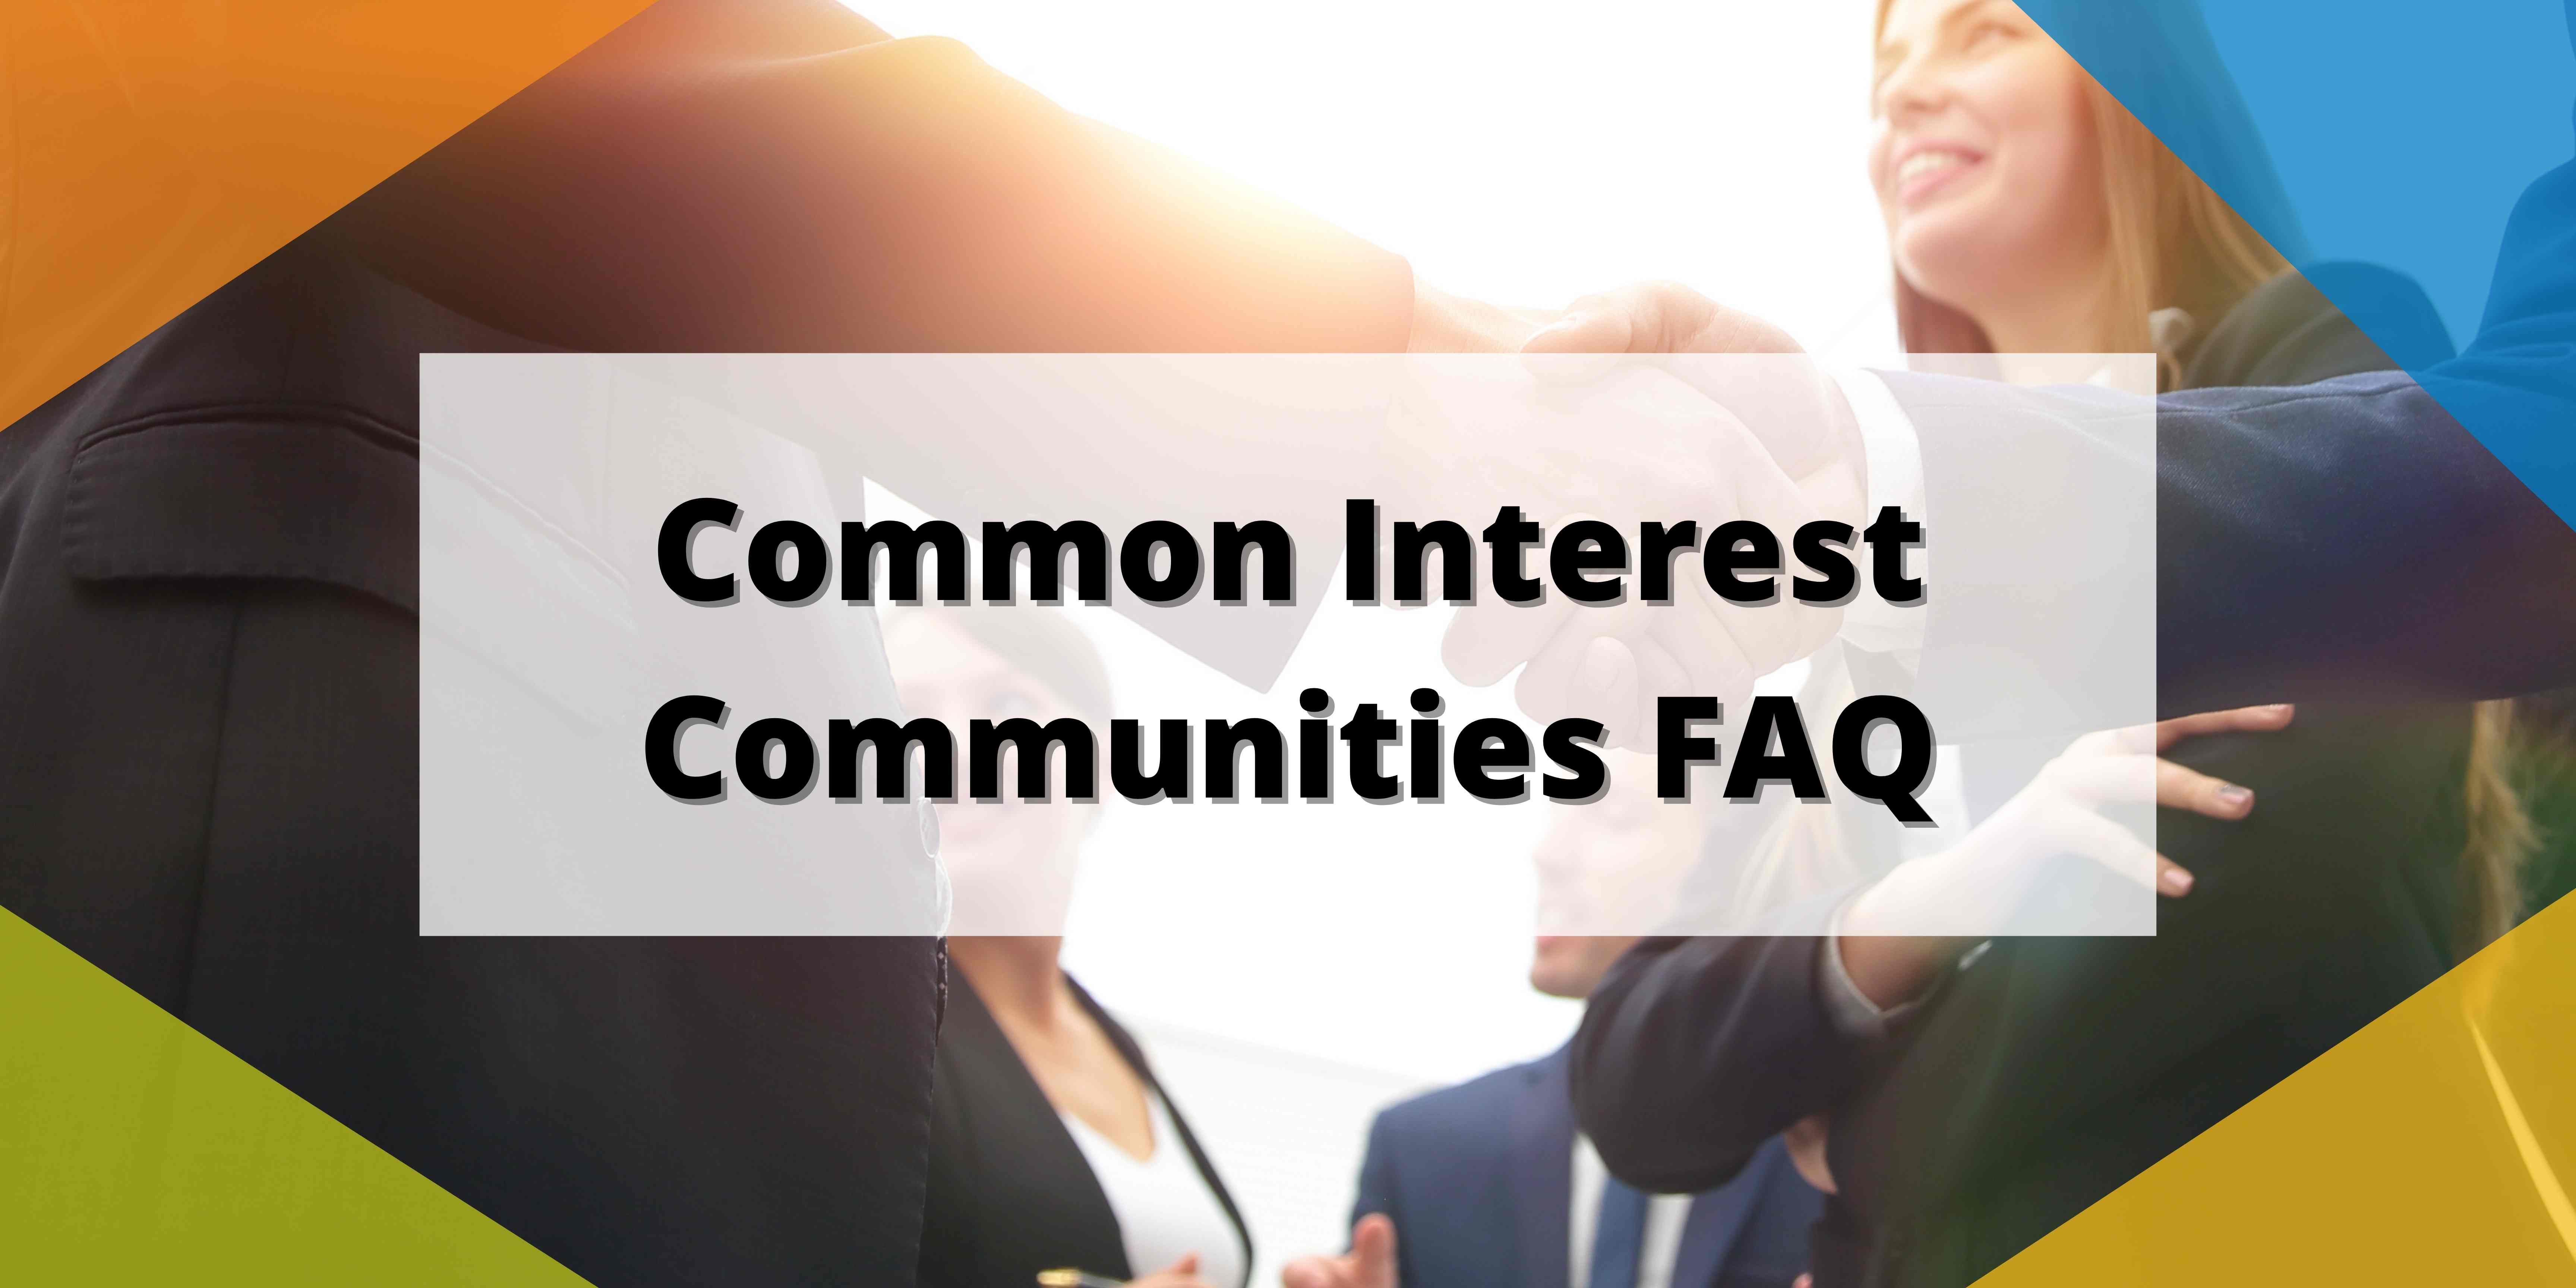 Common Interest Communities FAQ